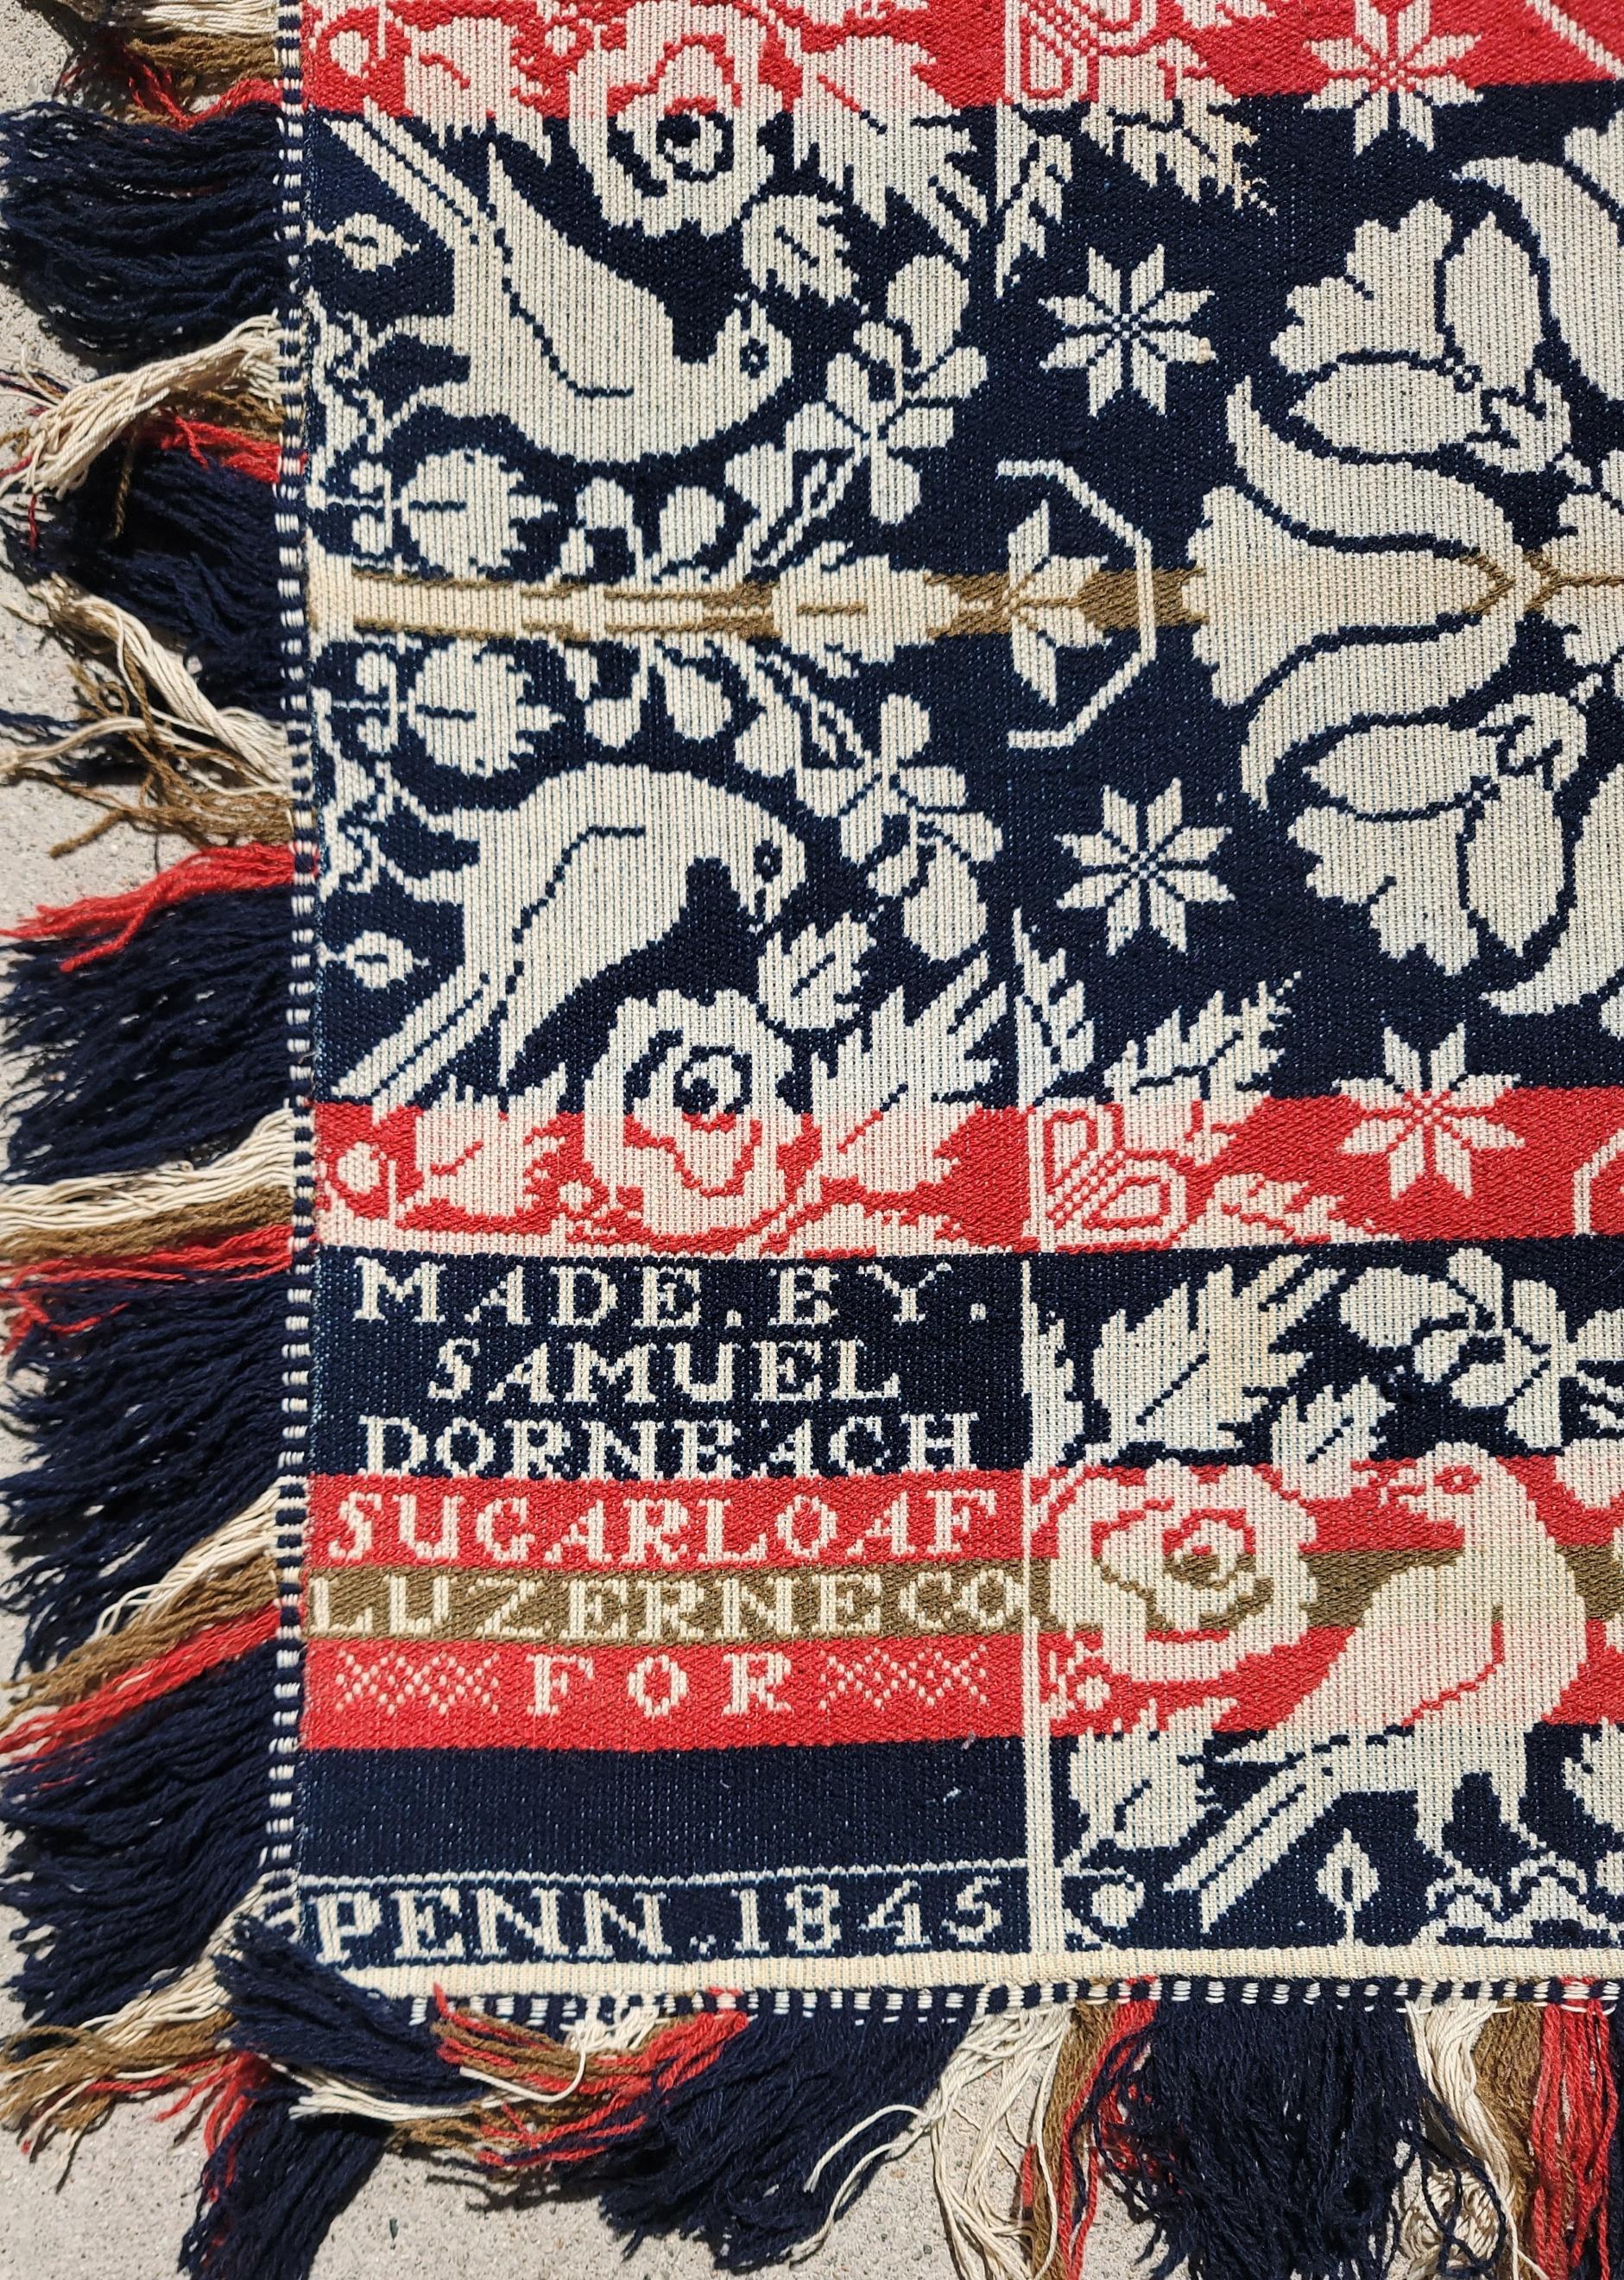 antique woven coverlet